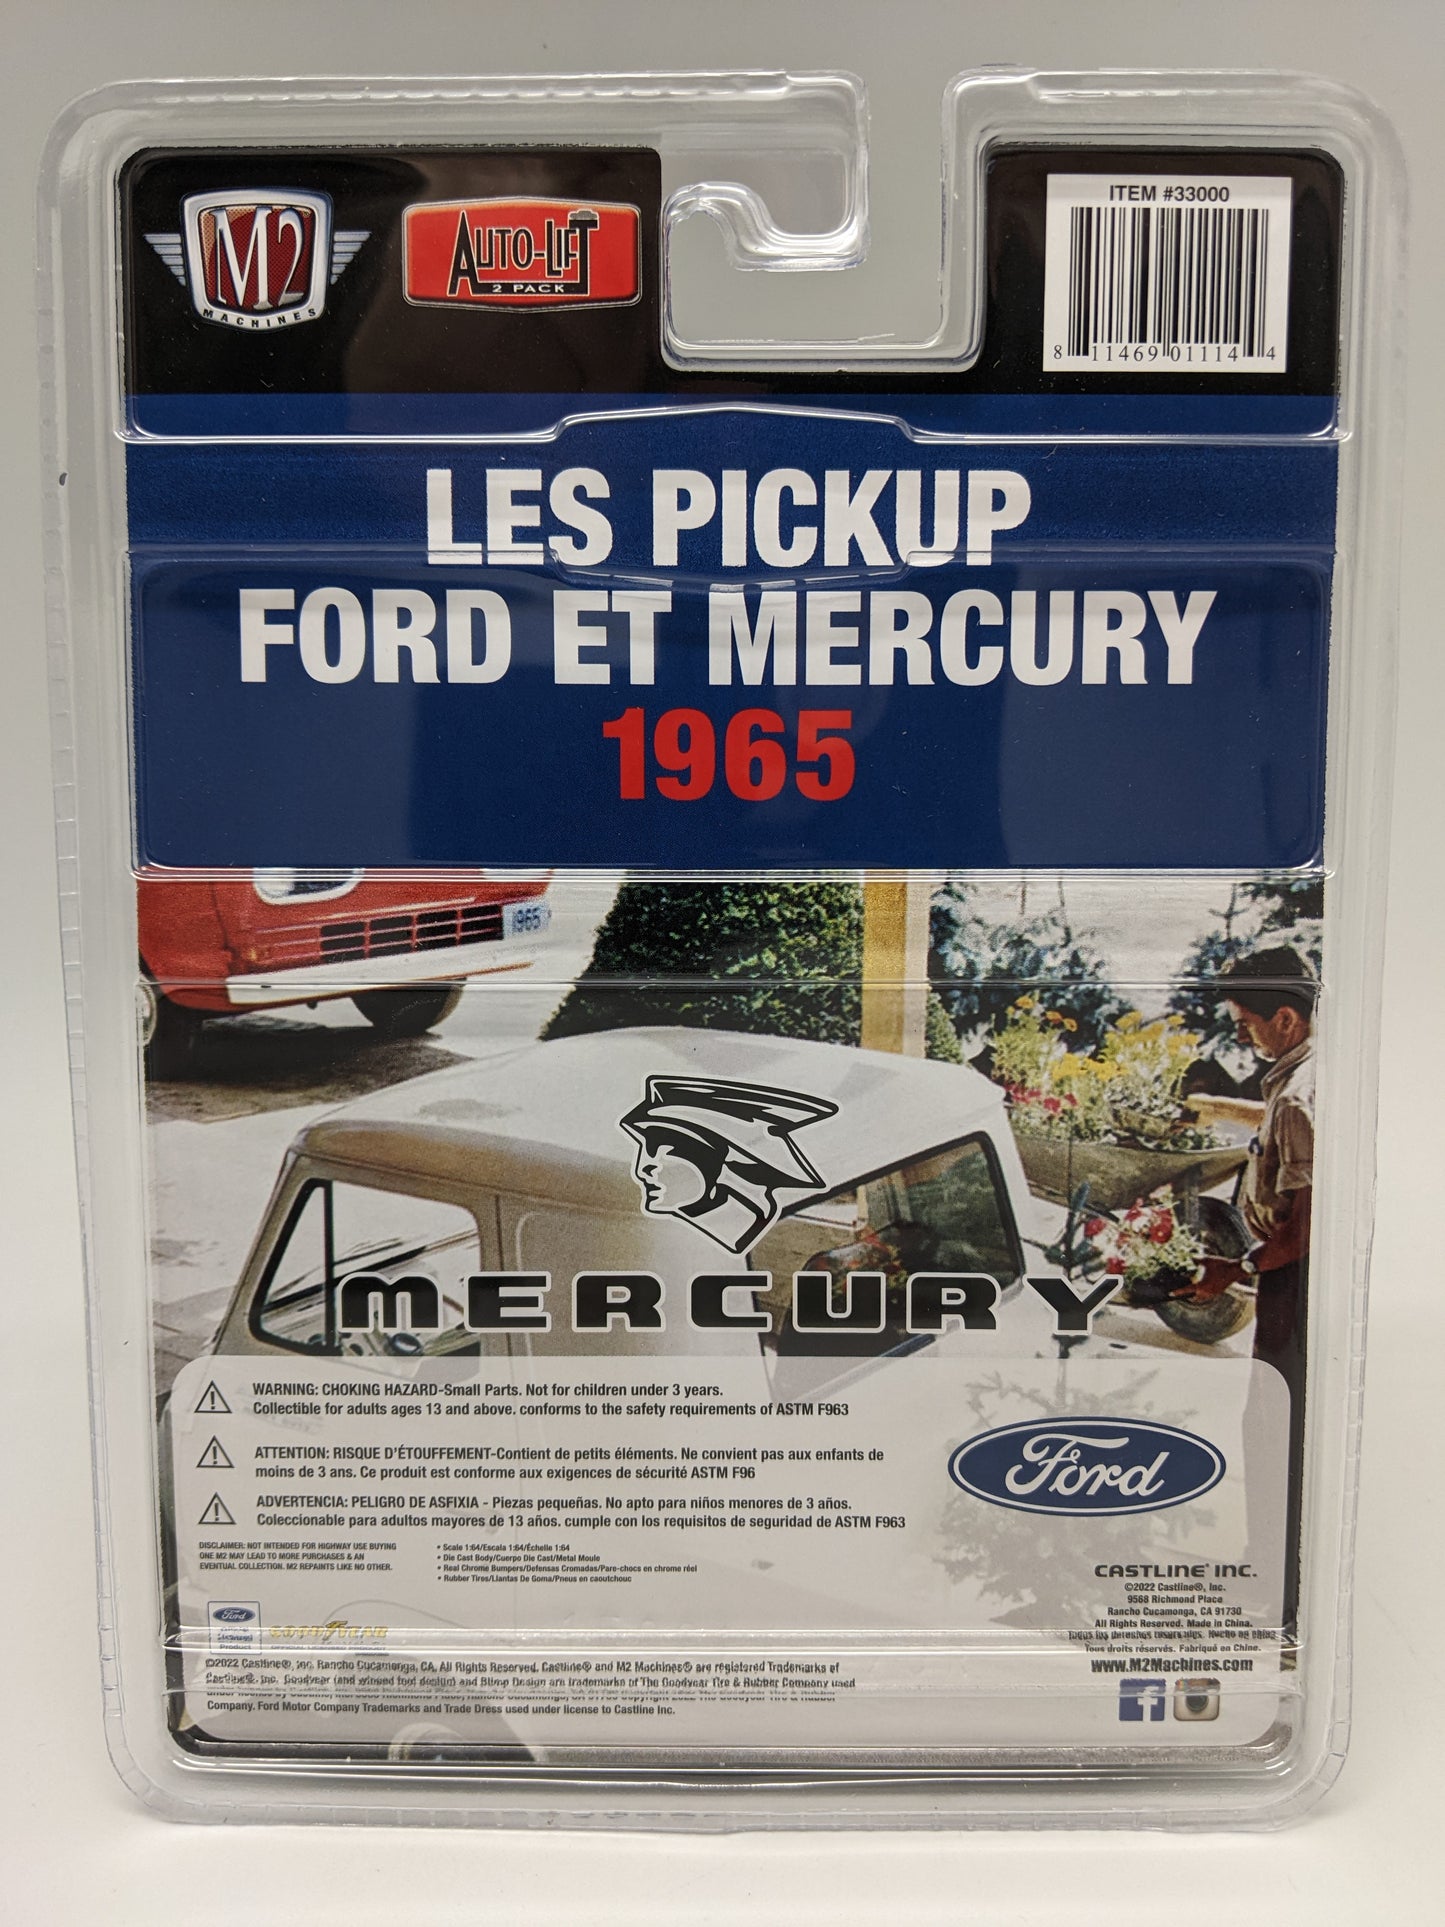 M2 1965 Ford Econoline Auto Lift - Les Pickup Ford Et Mercury